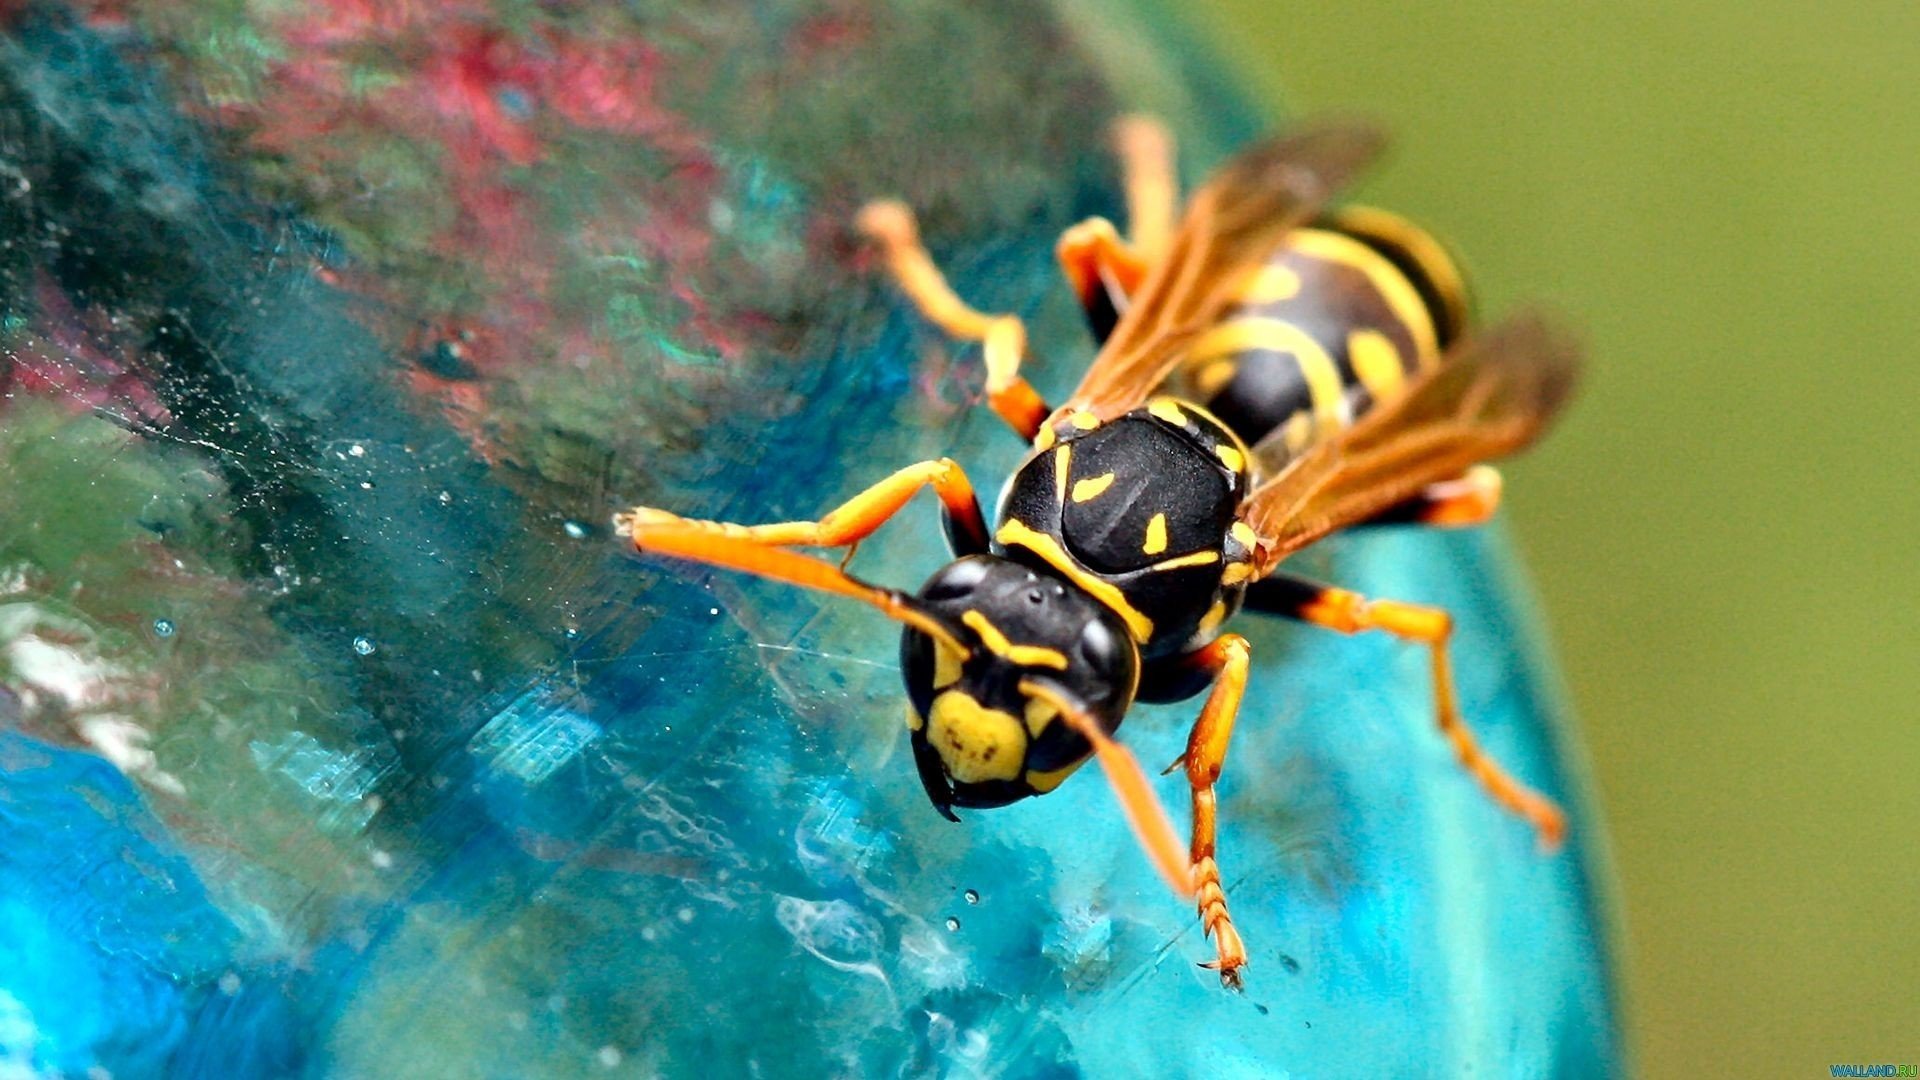 wasps Wallpaper